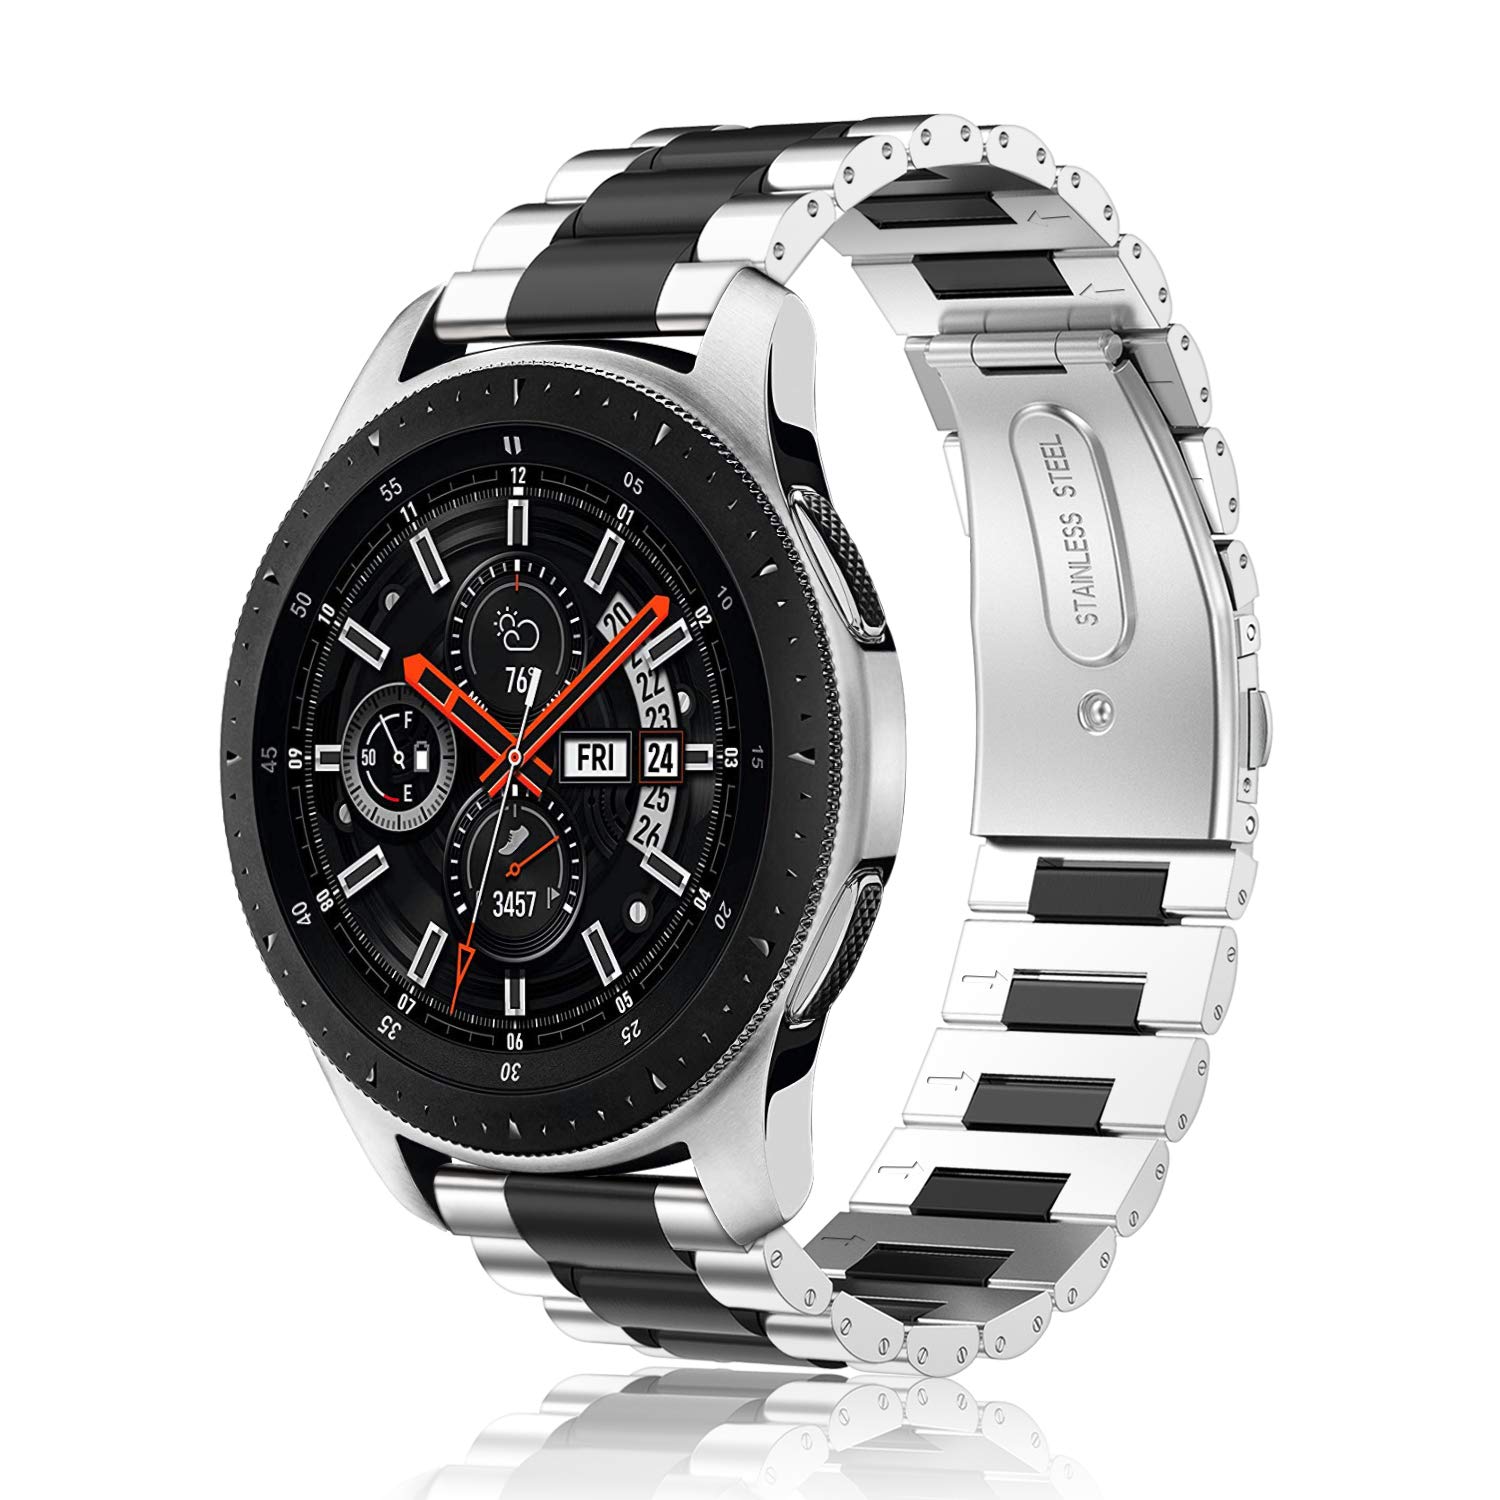 for Samsung Galaxy Watch 3 45mm / Gear S3 / Galaxy Watch 46mm バンド 22mm 時計バンド ステンレスバンド 金属ベルト 交換用ベルト 調整工具付き Gear S3 Frontier/S3 Classic/Galaxy Watch 46mm / Watch 3 45mm 対応（デザインA，ブラック/シルバー）